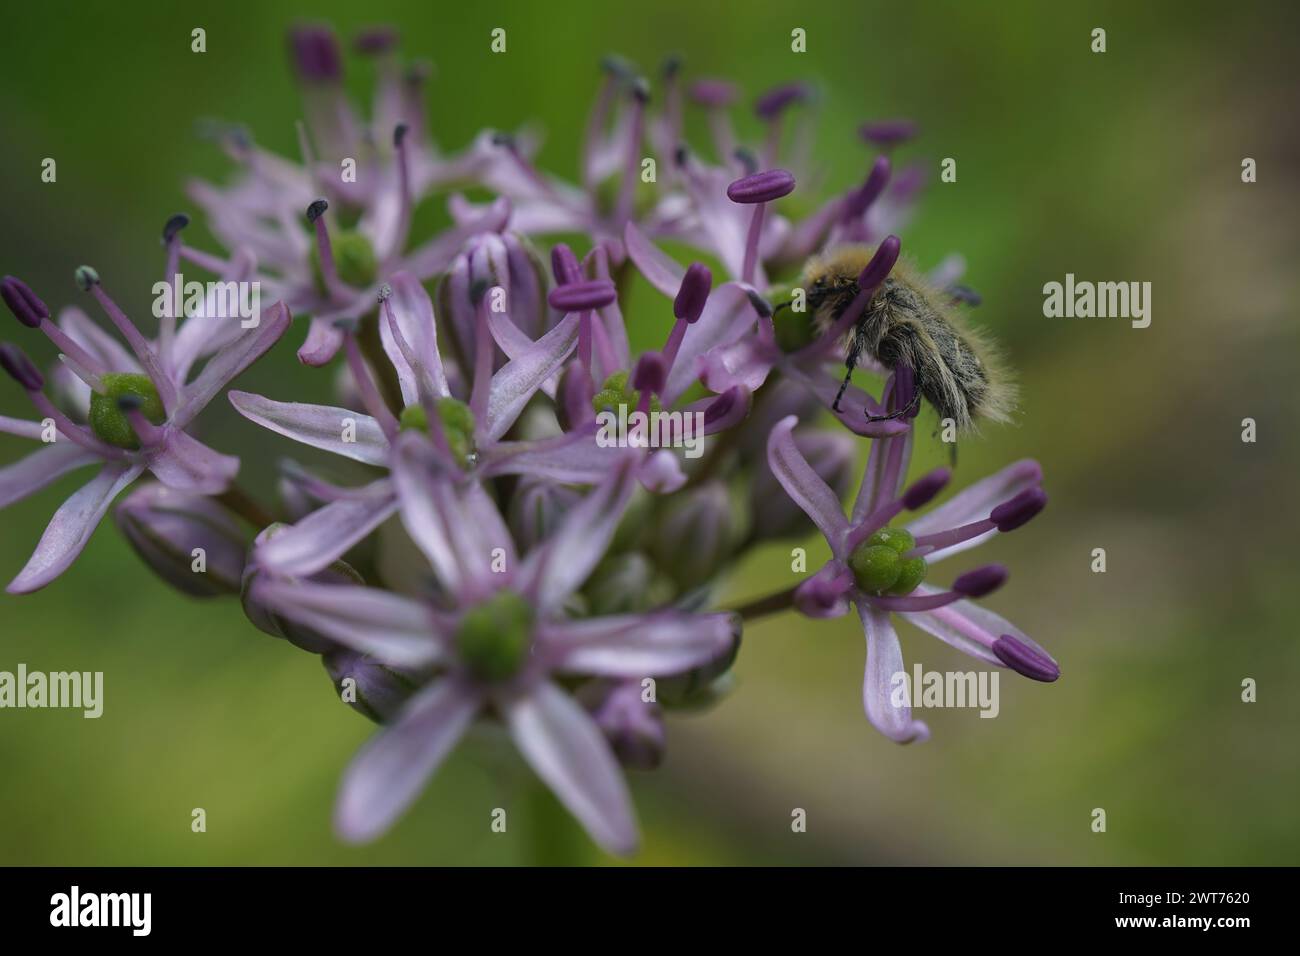 The purple flower of Allium ampeloprasum Stock Photo